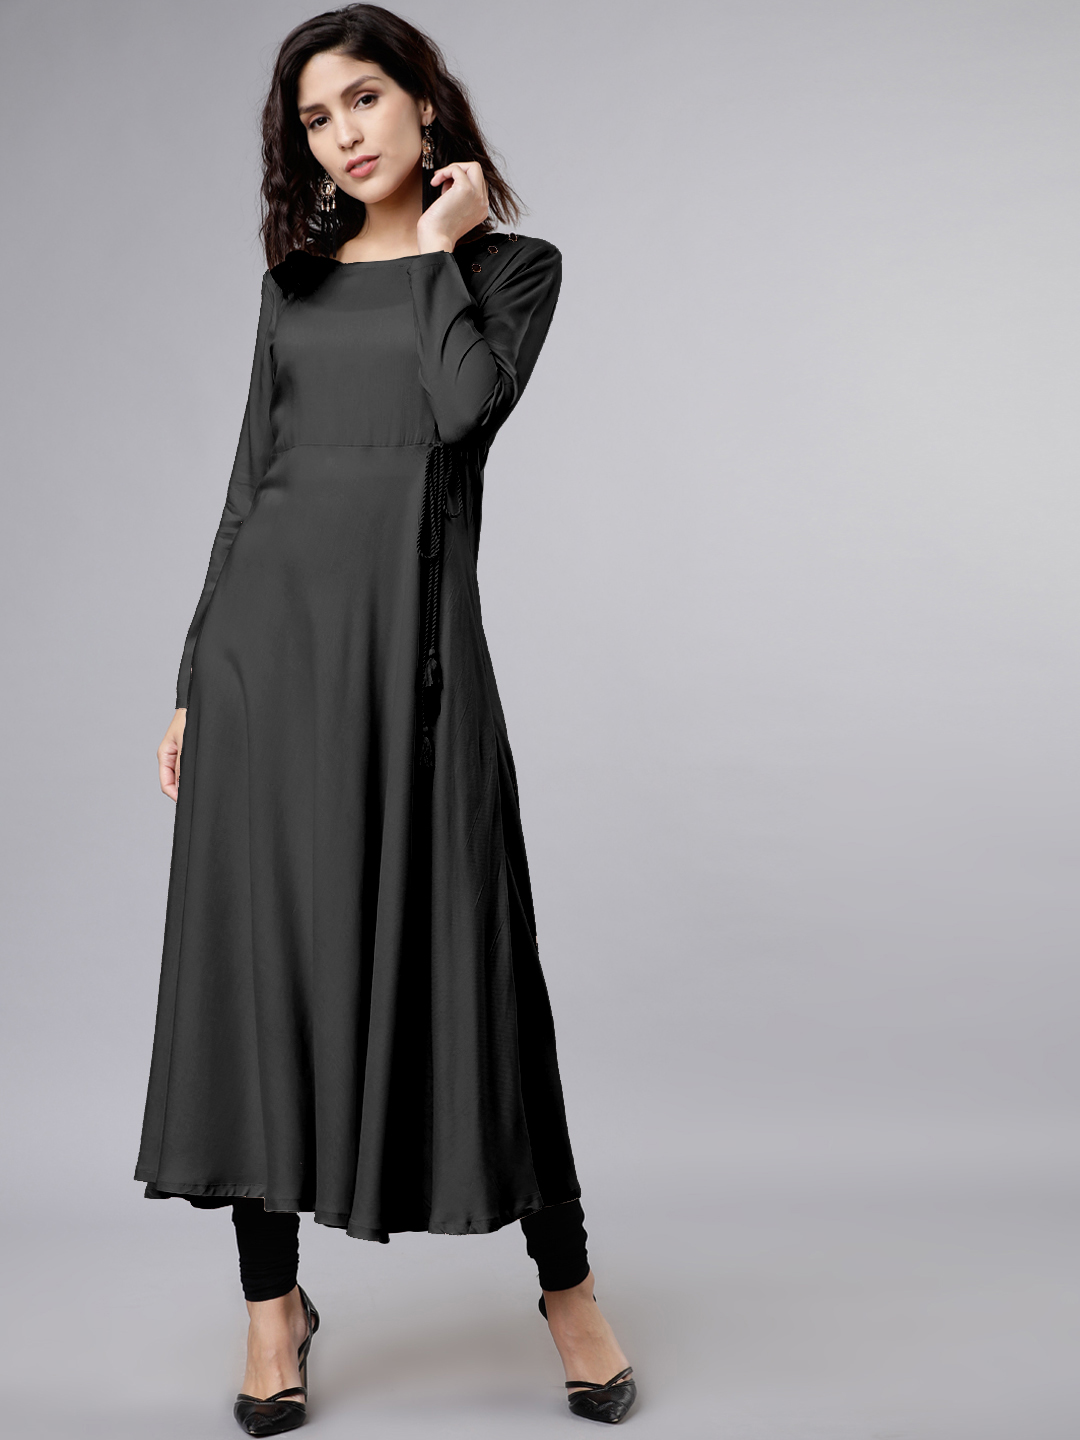 Buy Plain Rayon Salwar Suit in Black Online - Salwar Kameez